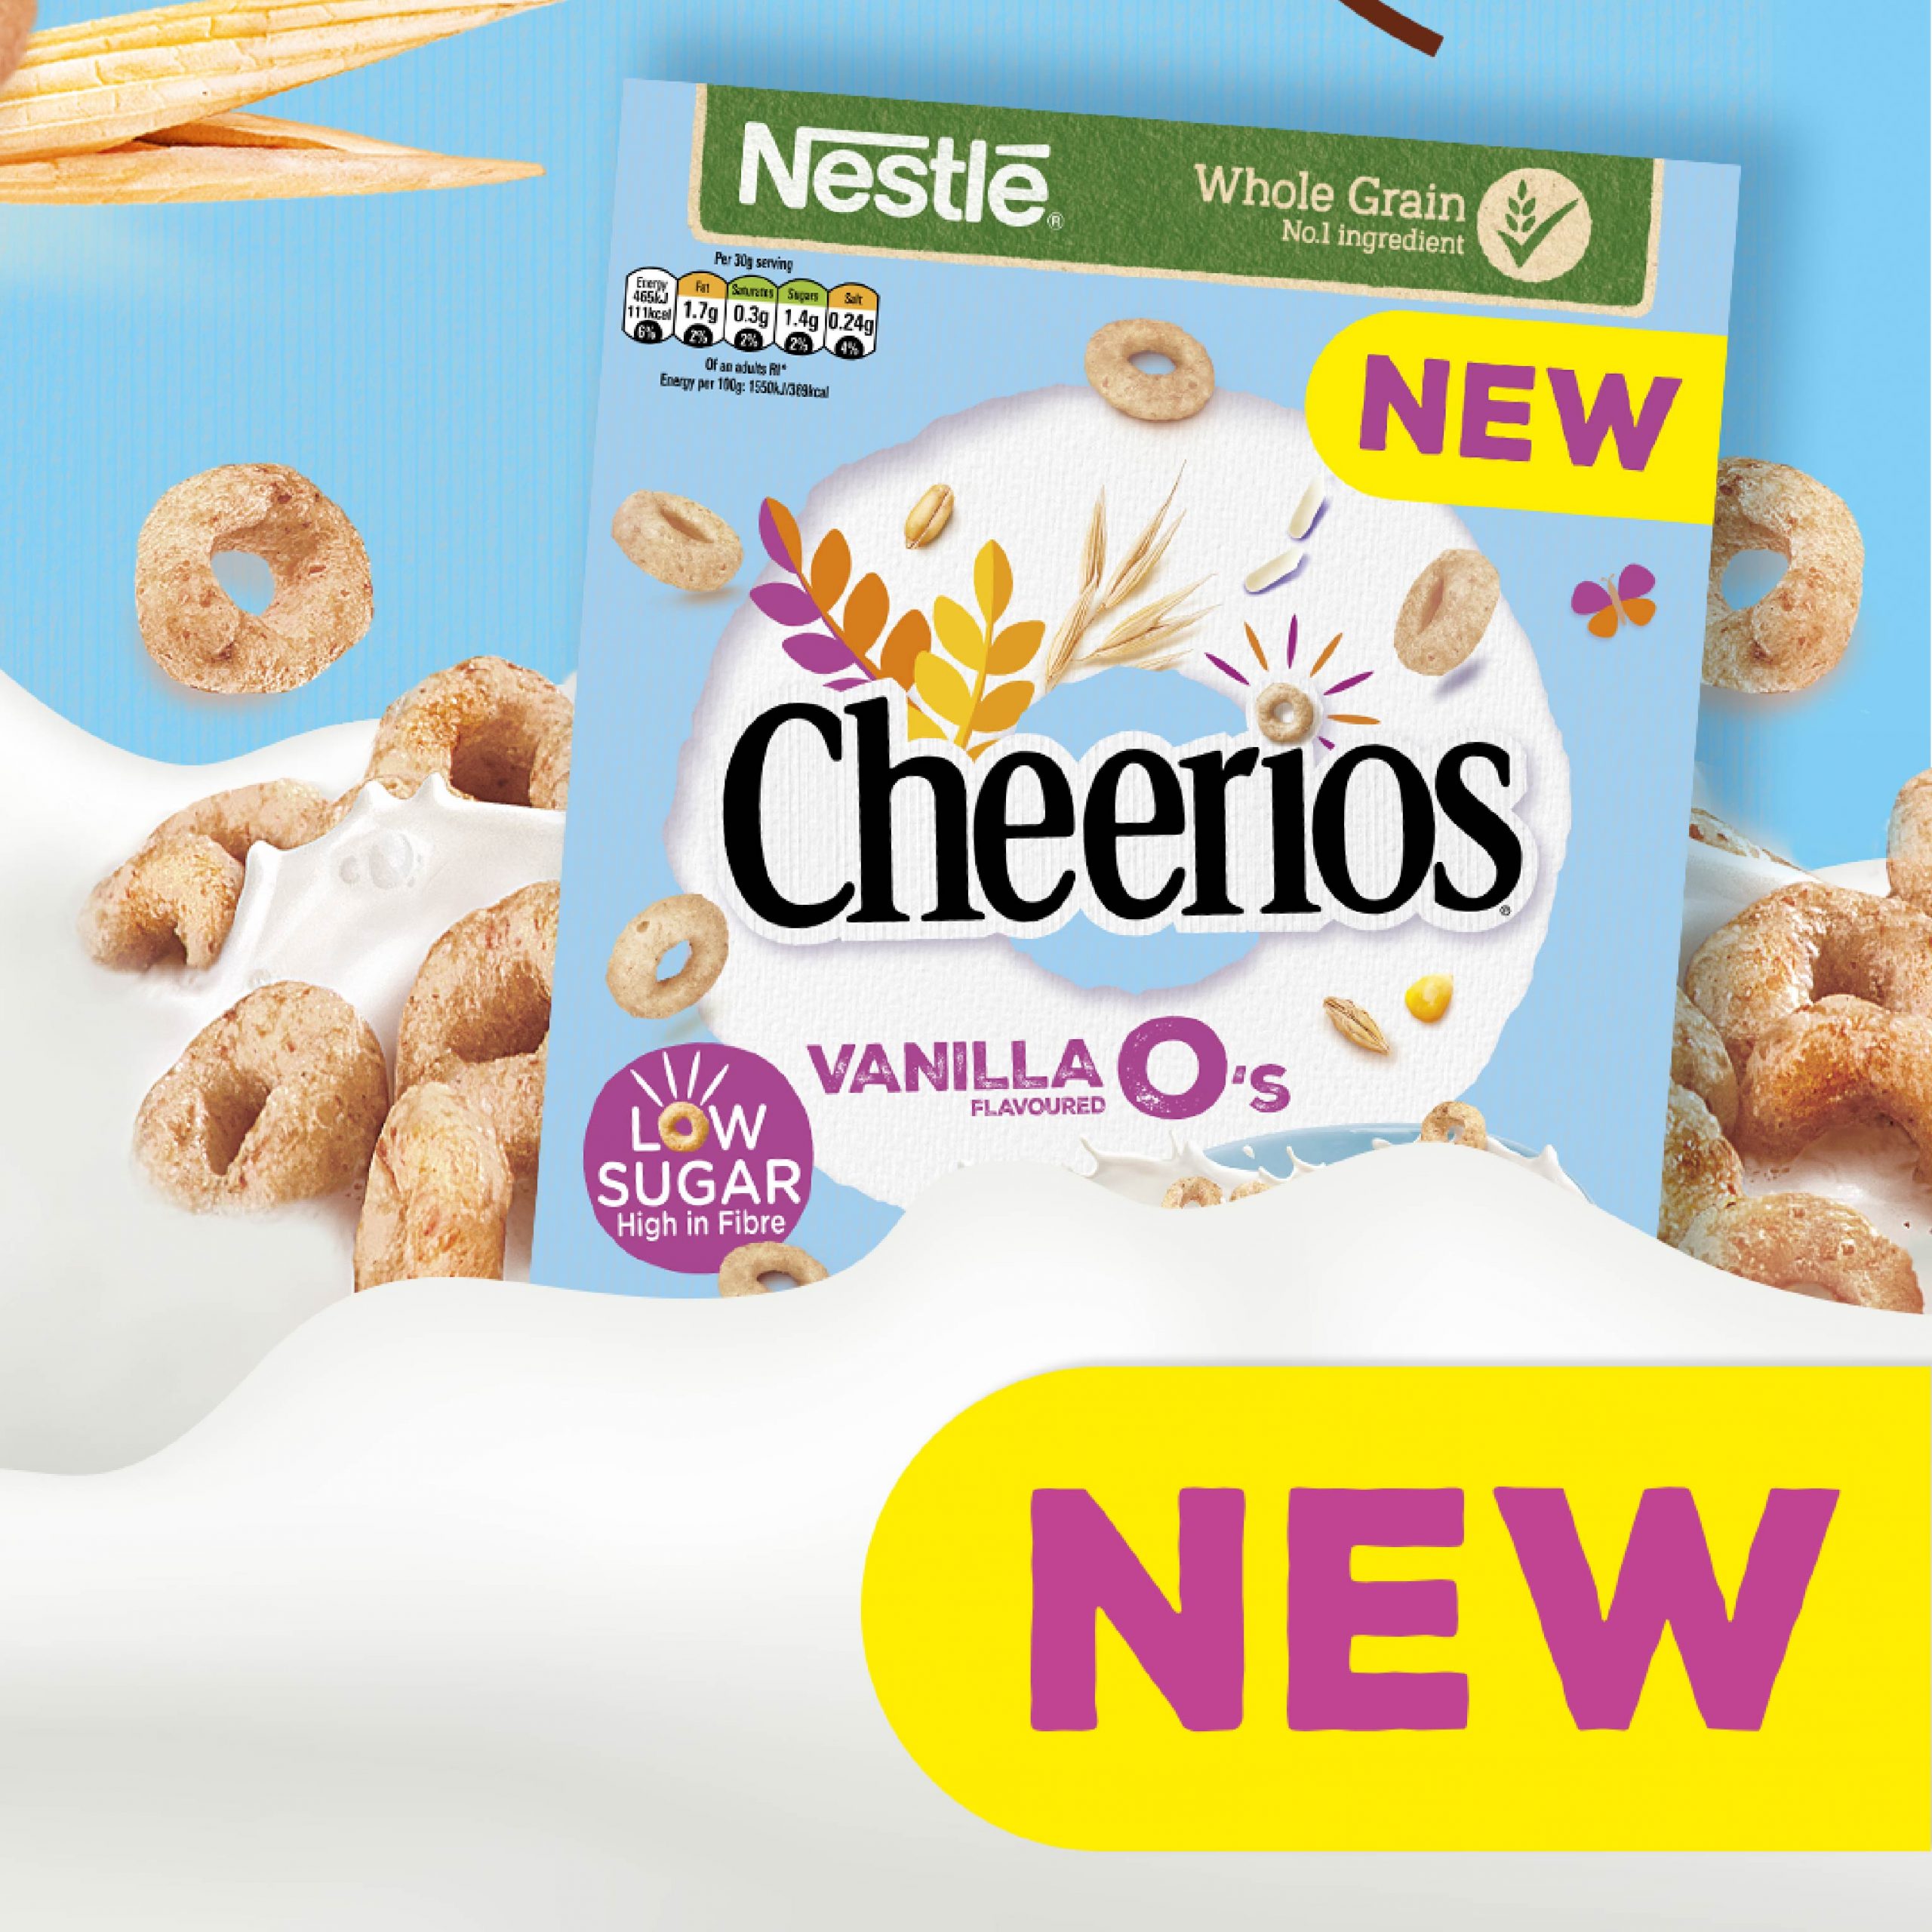 Nestlé Cereals launches new Low Sugar Cheerios Vanilla O’s